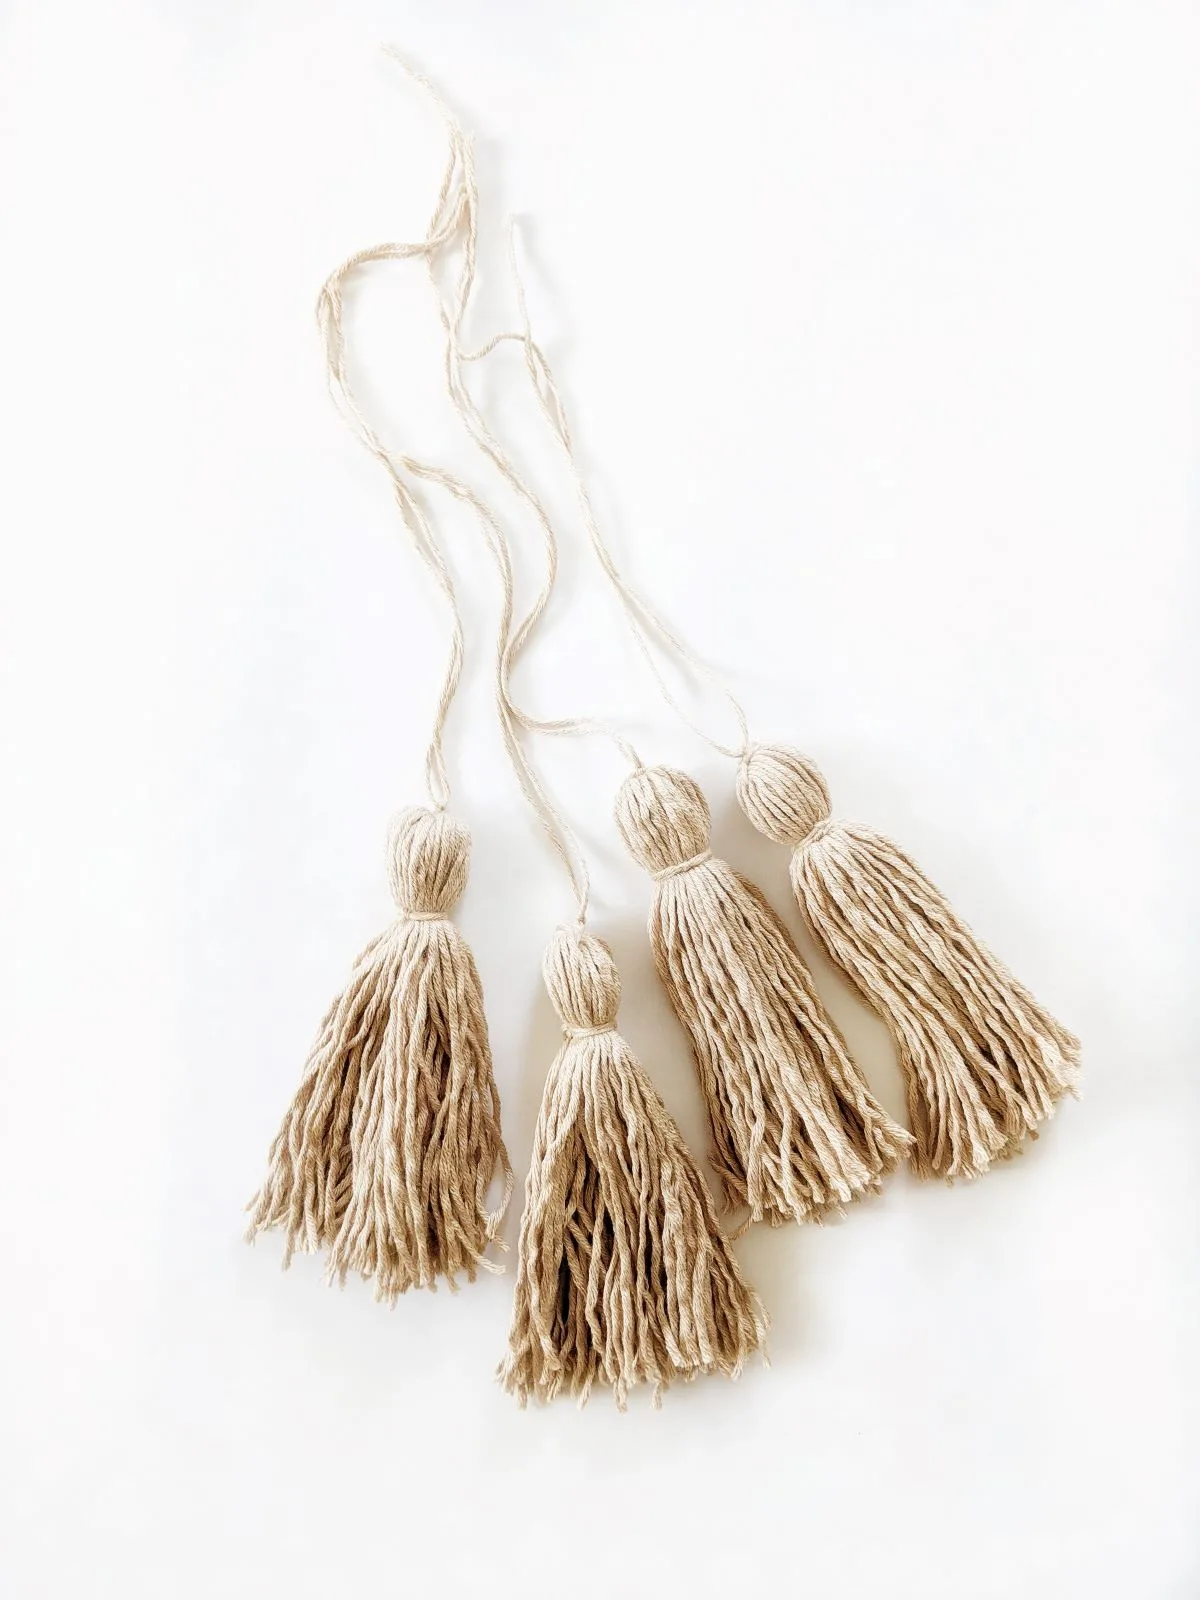 4 handmade tassels on a white surface using Lion Brand Coboo yarn